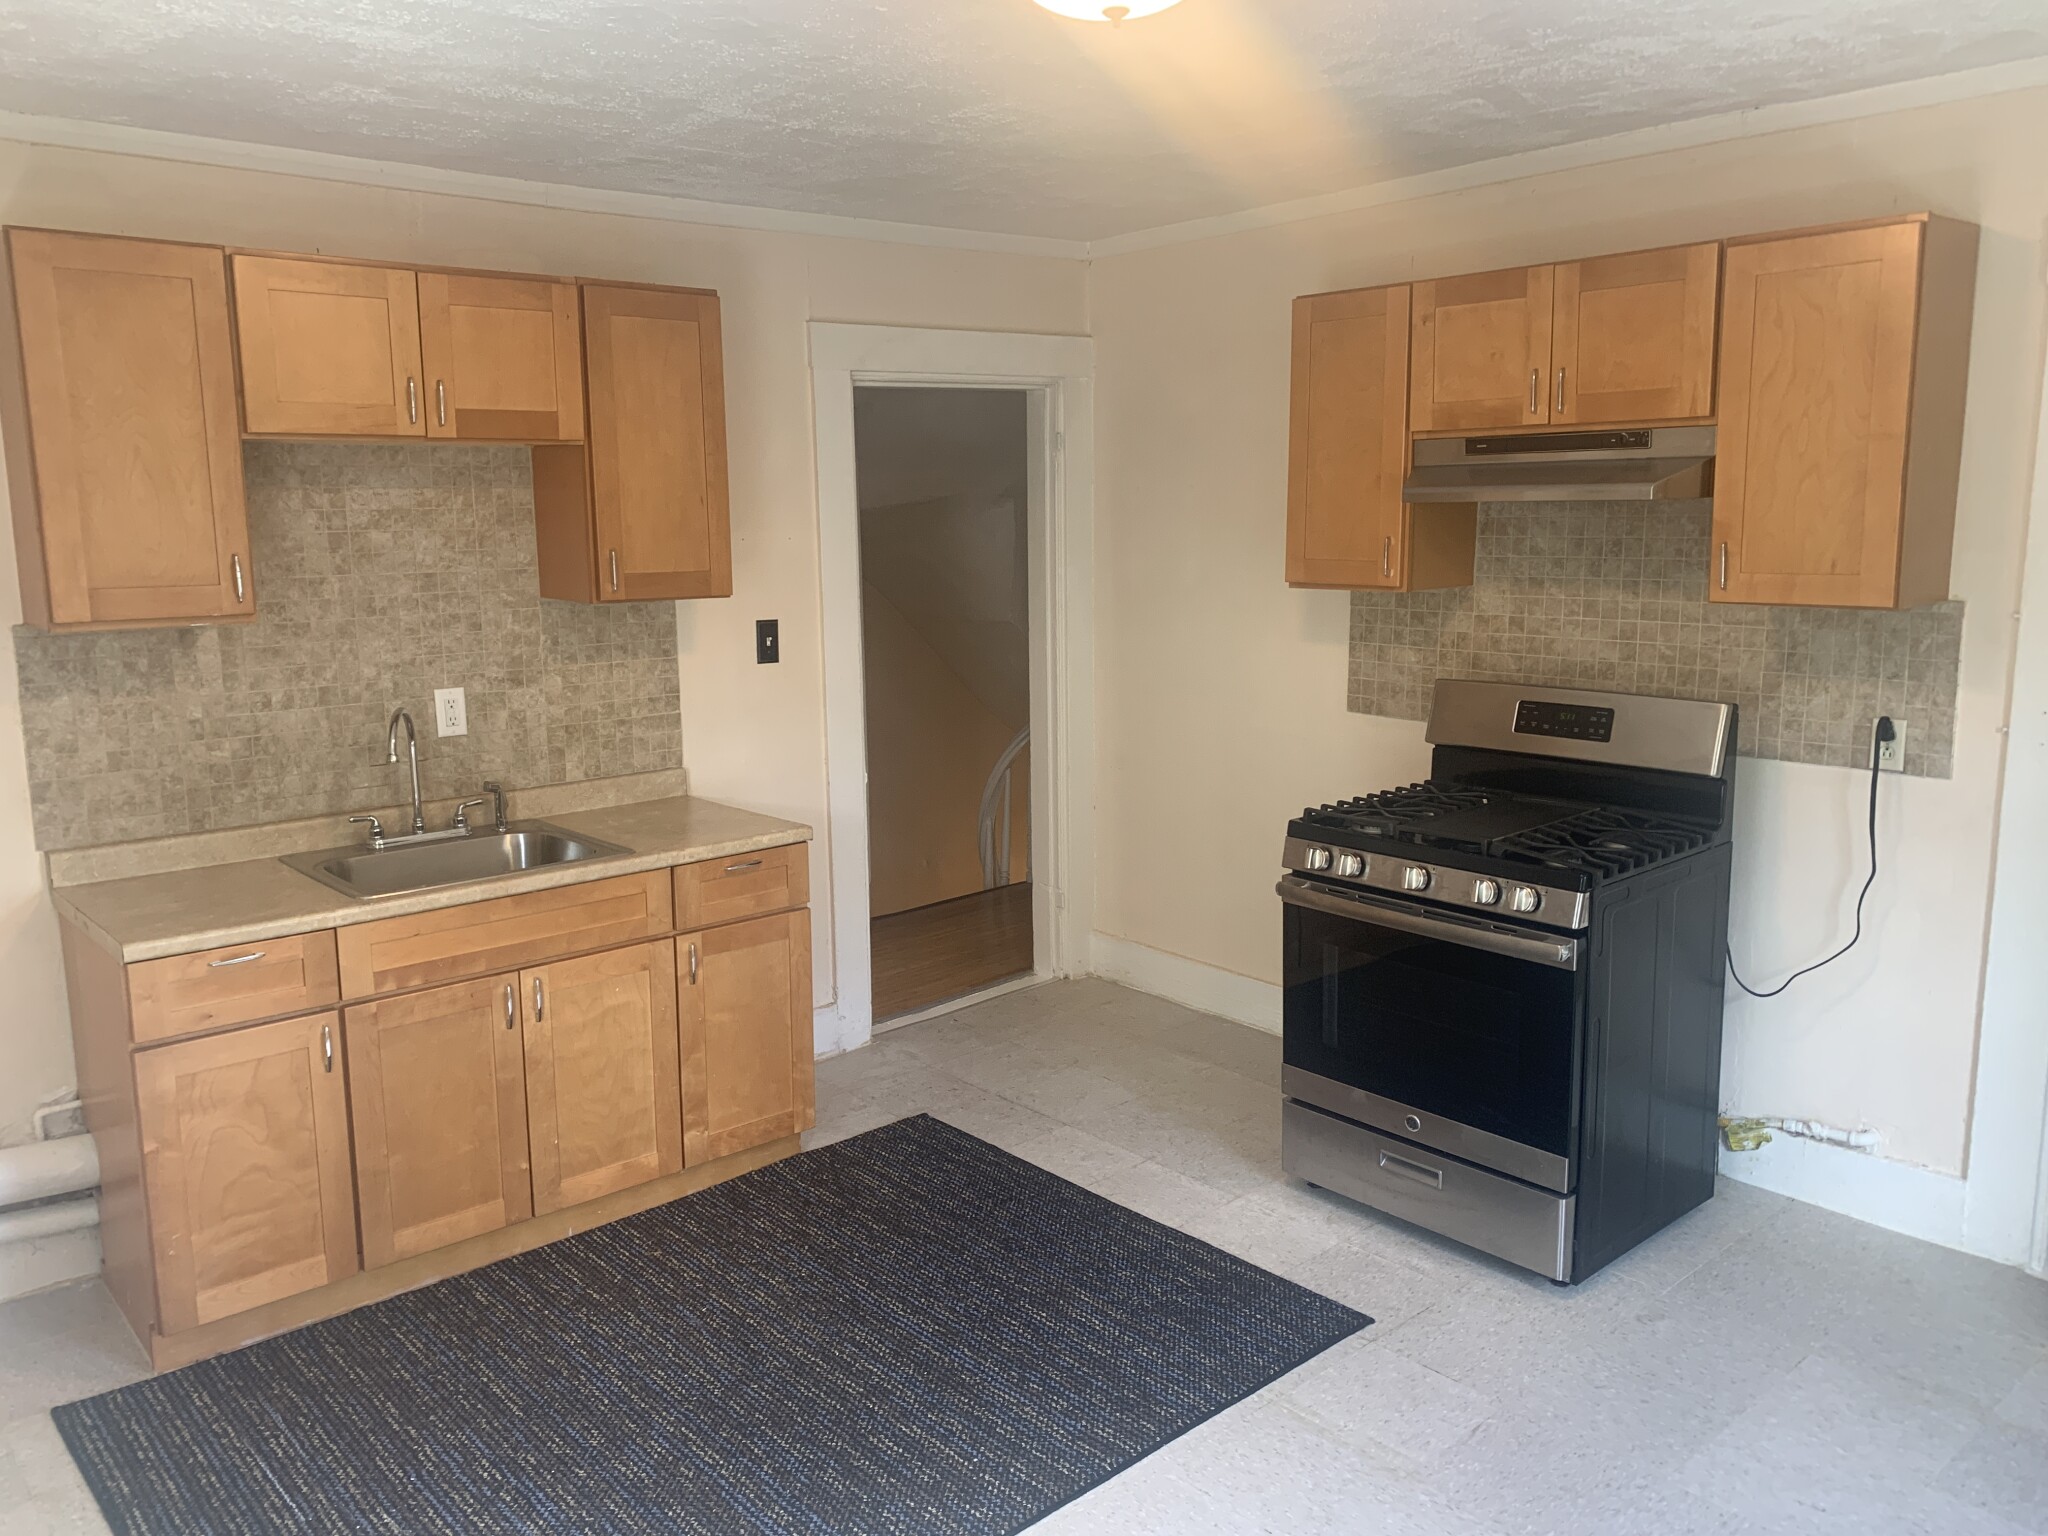 Photos of apartment on Cerina Rd.,Boston MA 02130